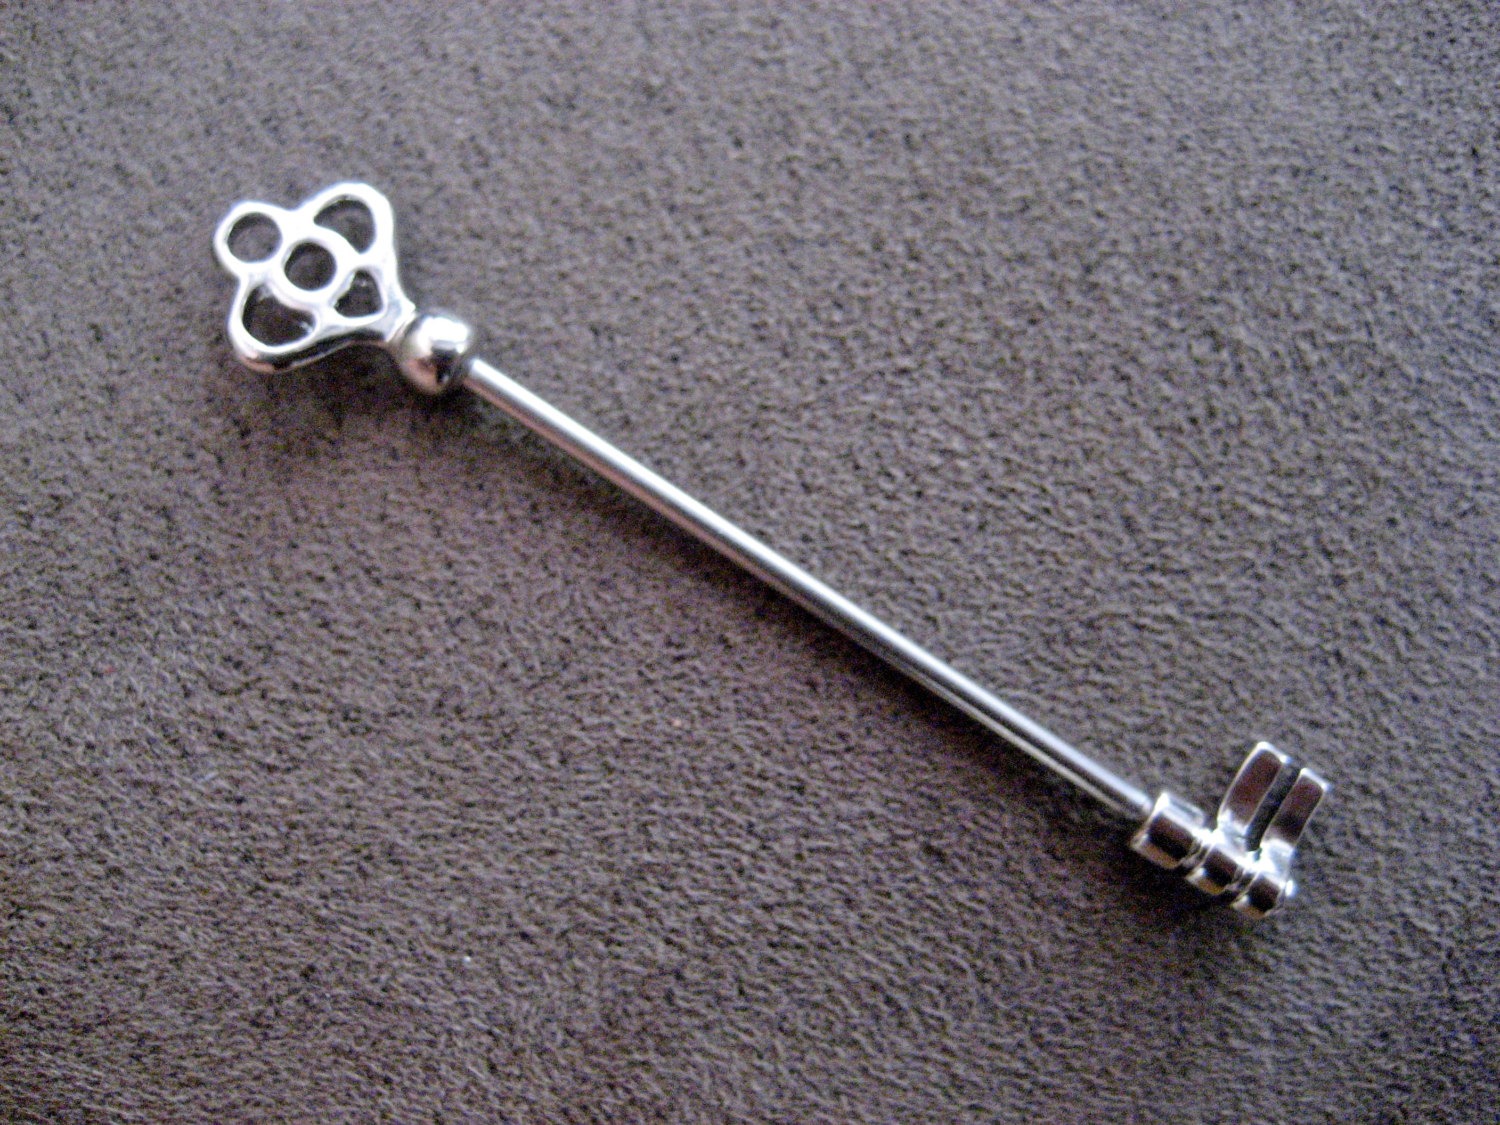 Skeleton Key Industrial Barbell Silver Surgical Steel Finish 14 Gauge Scaffold Piercing Bar Antique 2 Inch steampunk buy now online